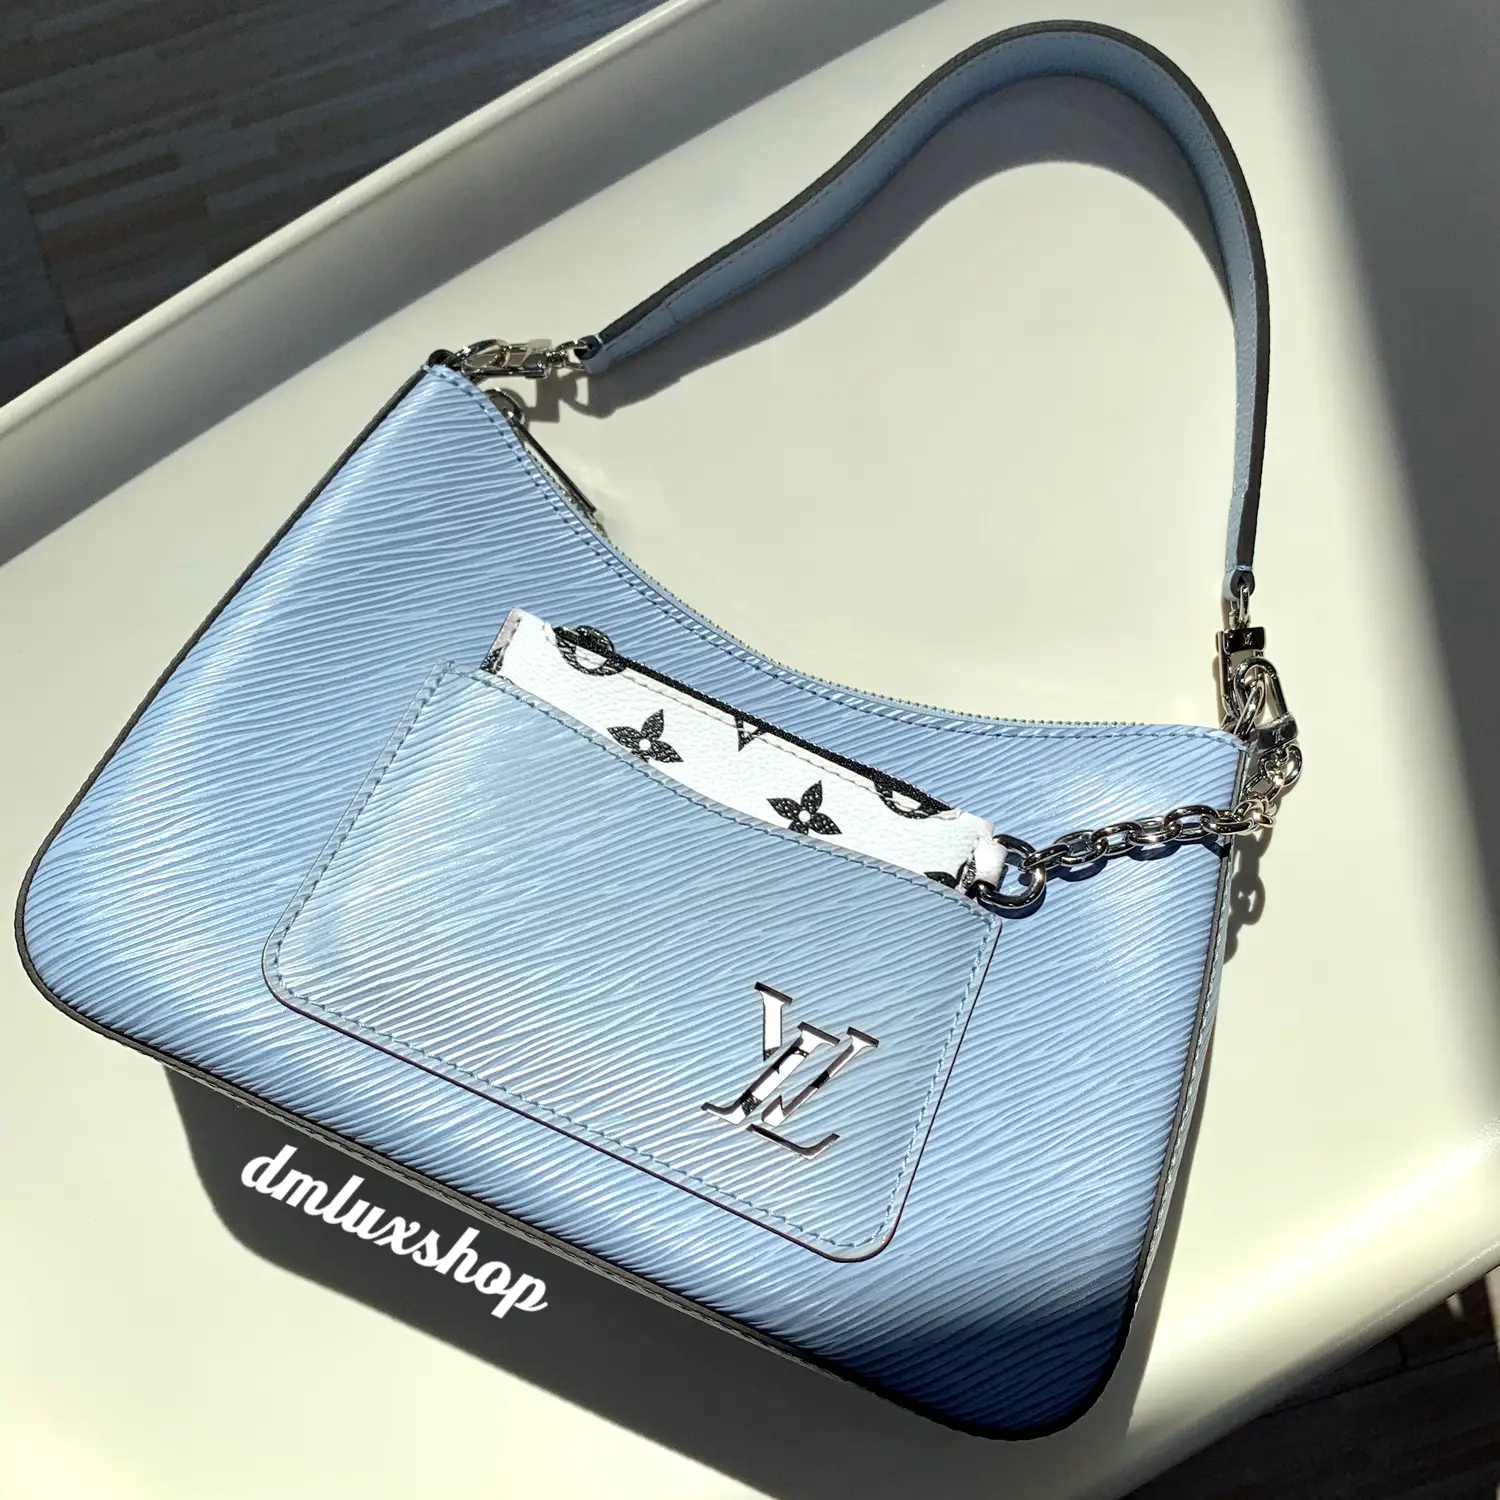 Opinion on LV Madeleine BB : r/handbags